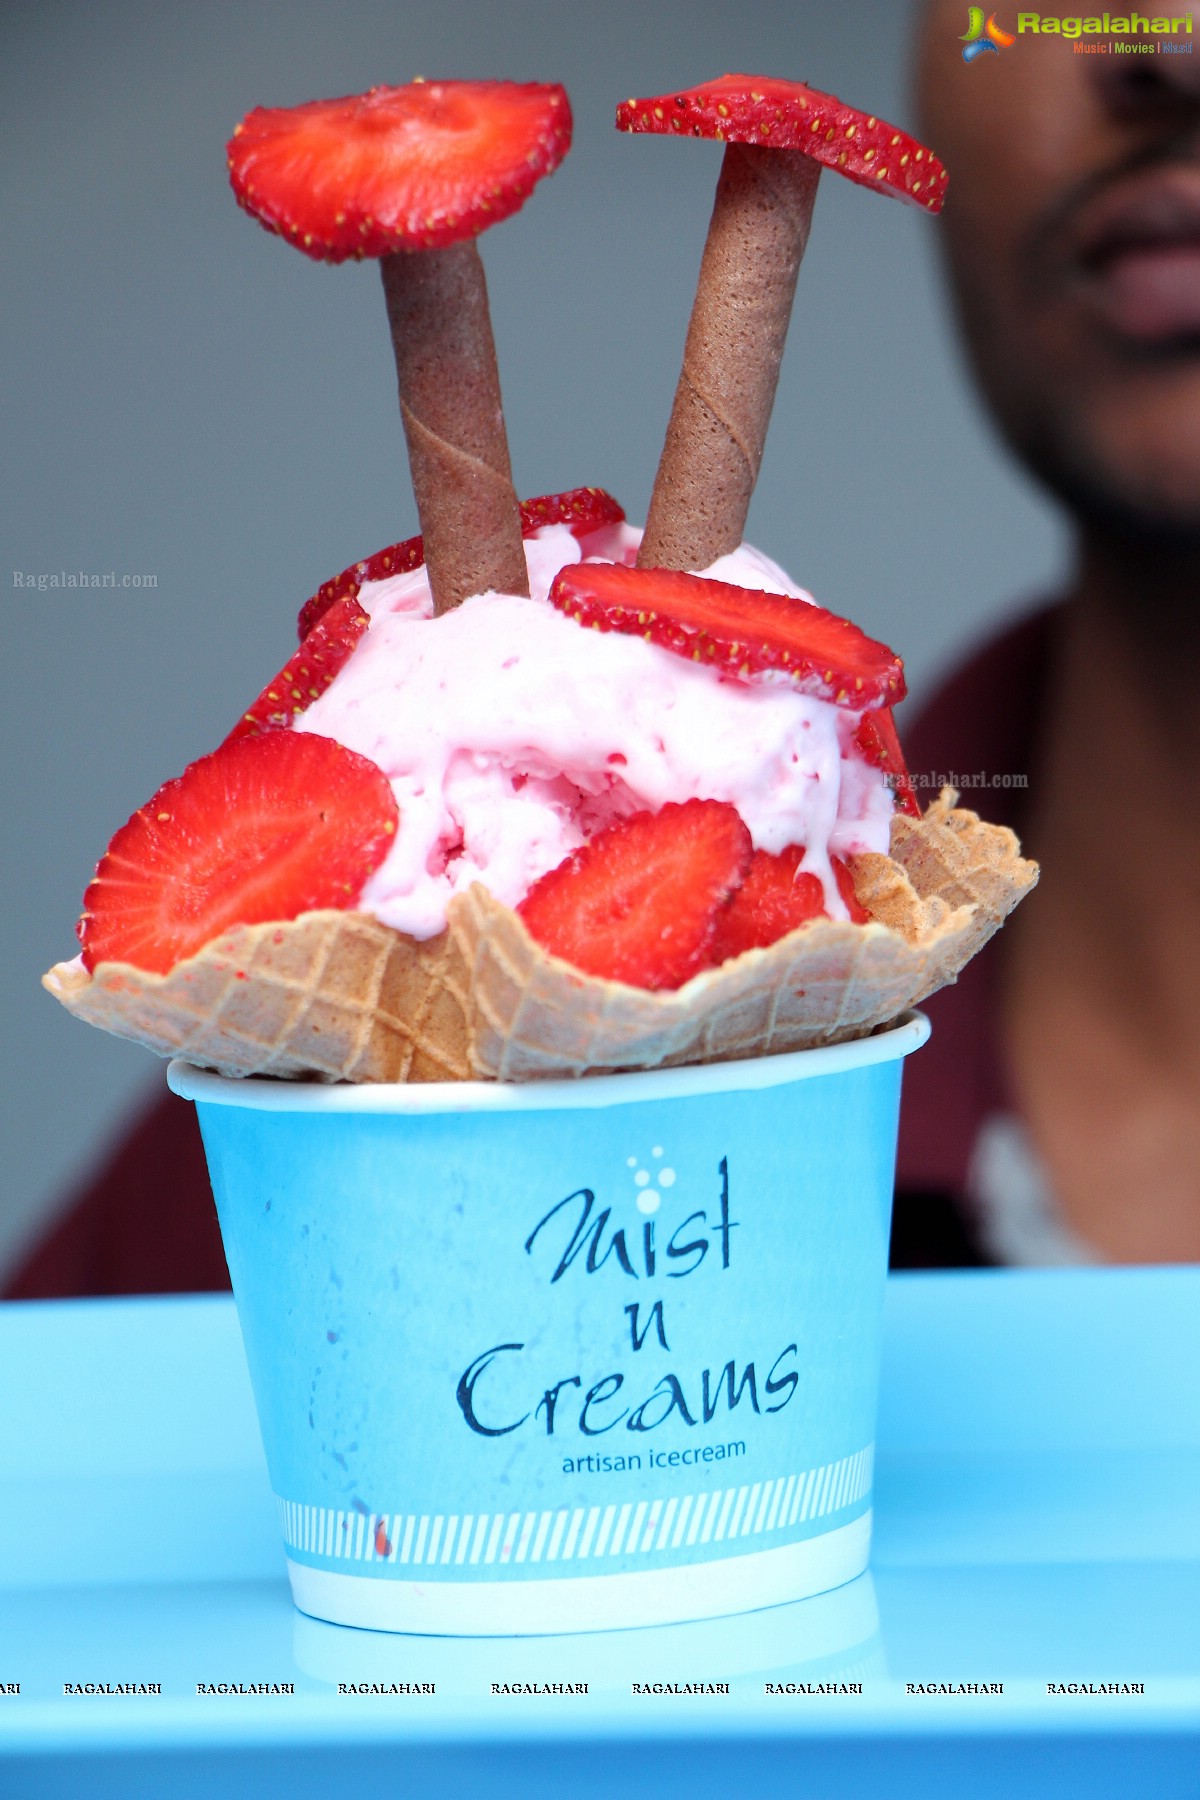 Mist n Creams Ice Cream Parlour Launch, Hyderabad